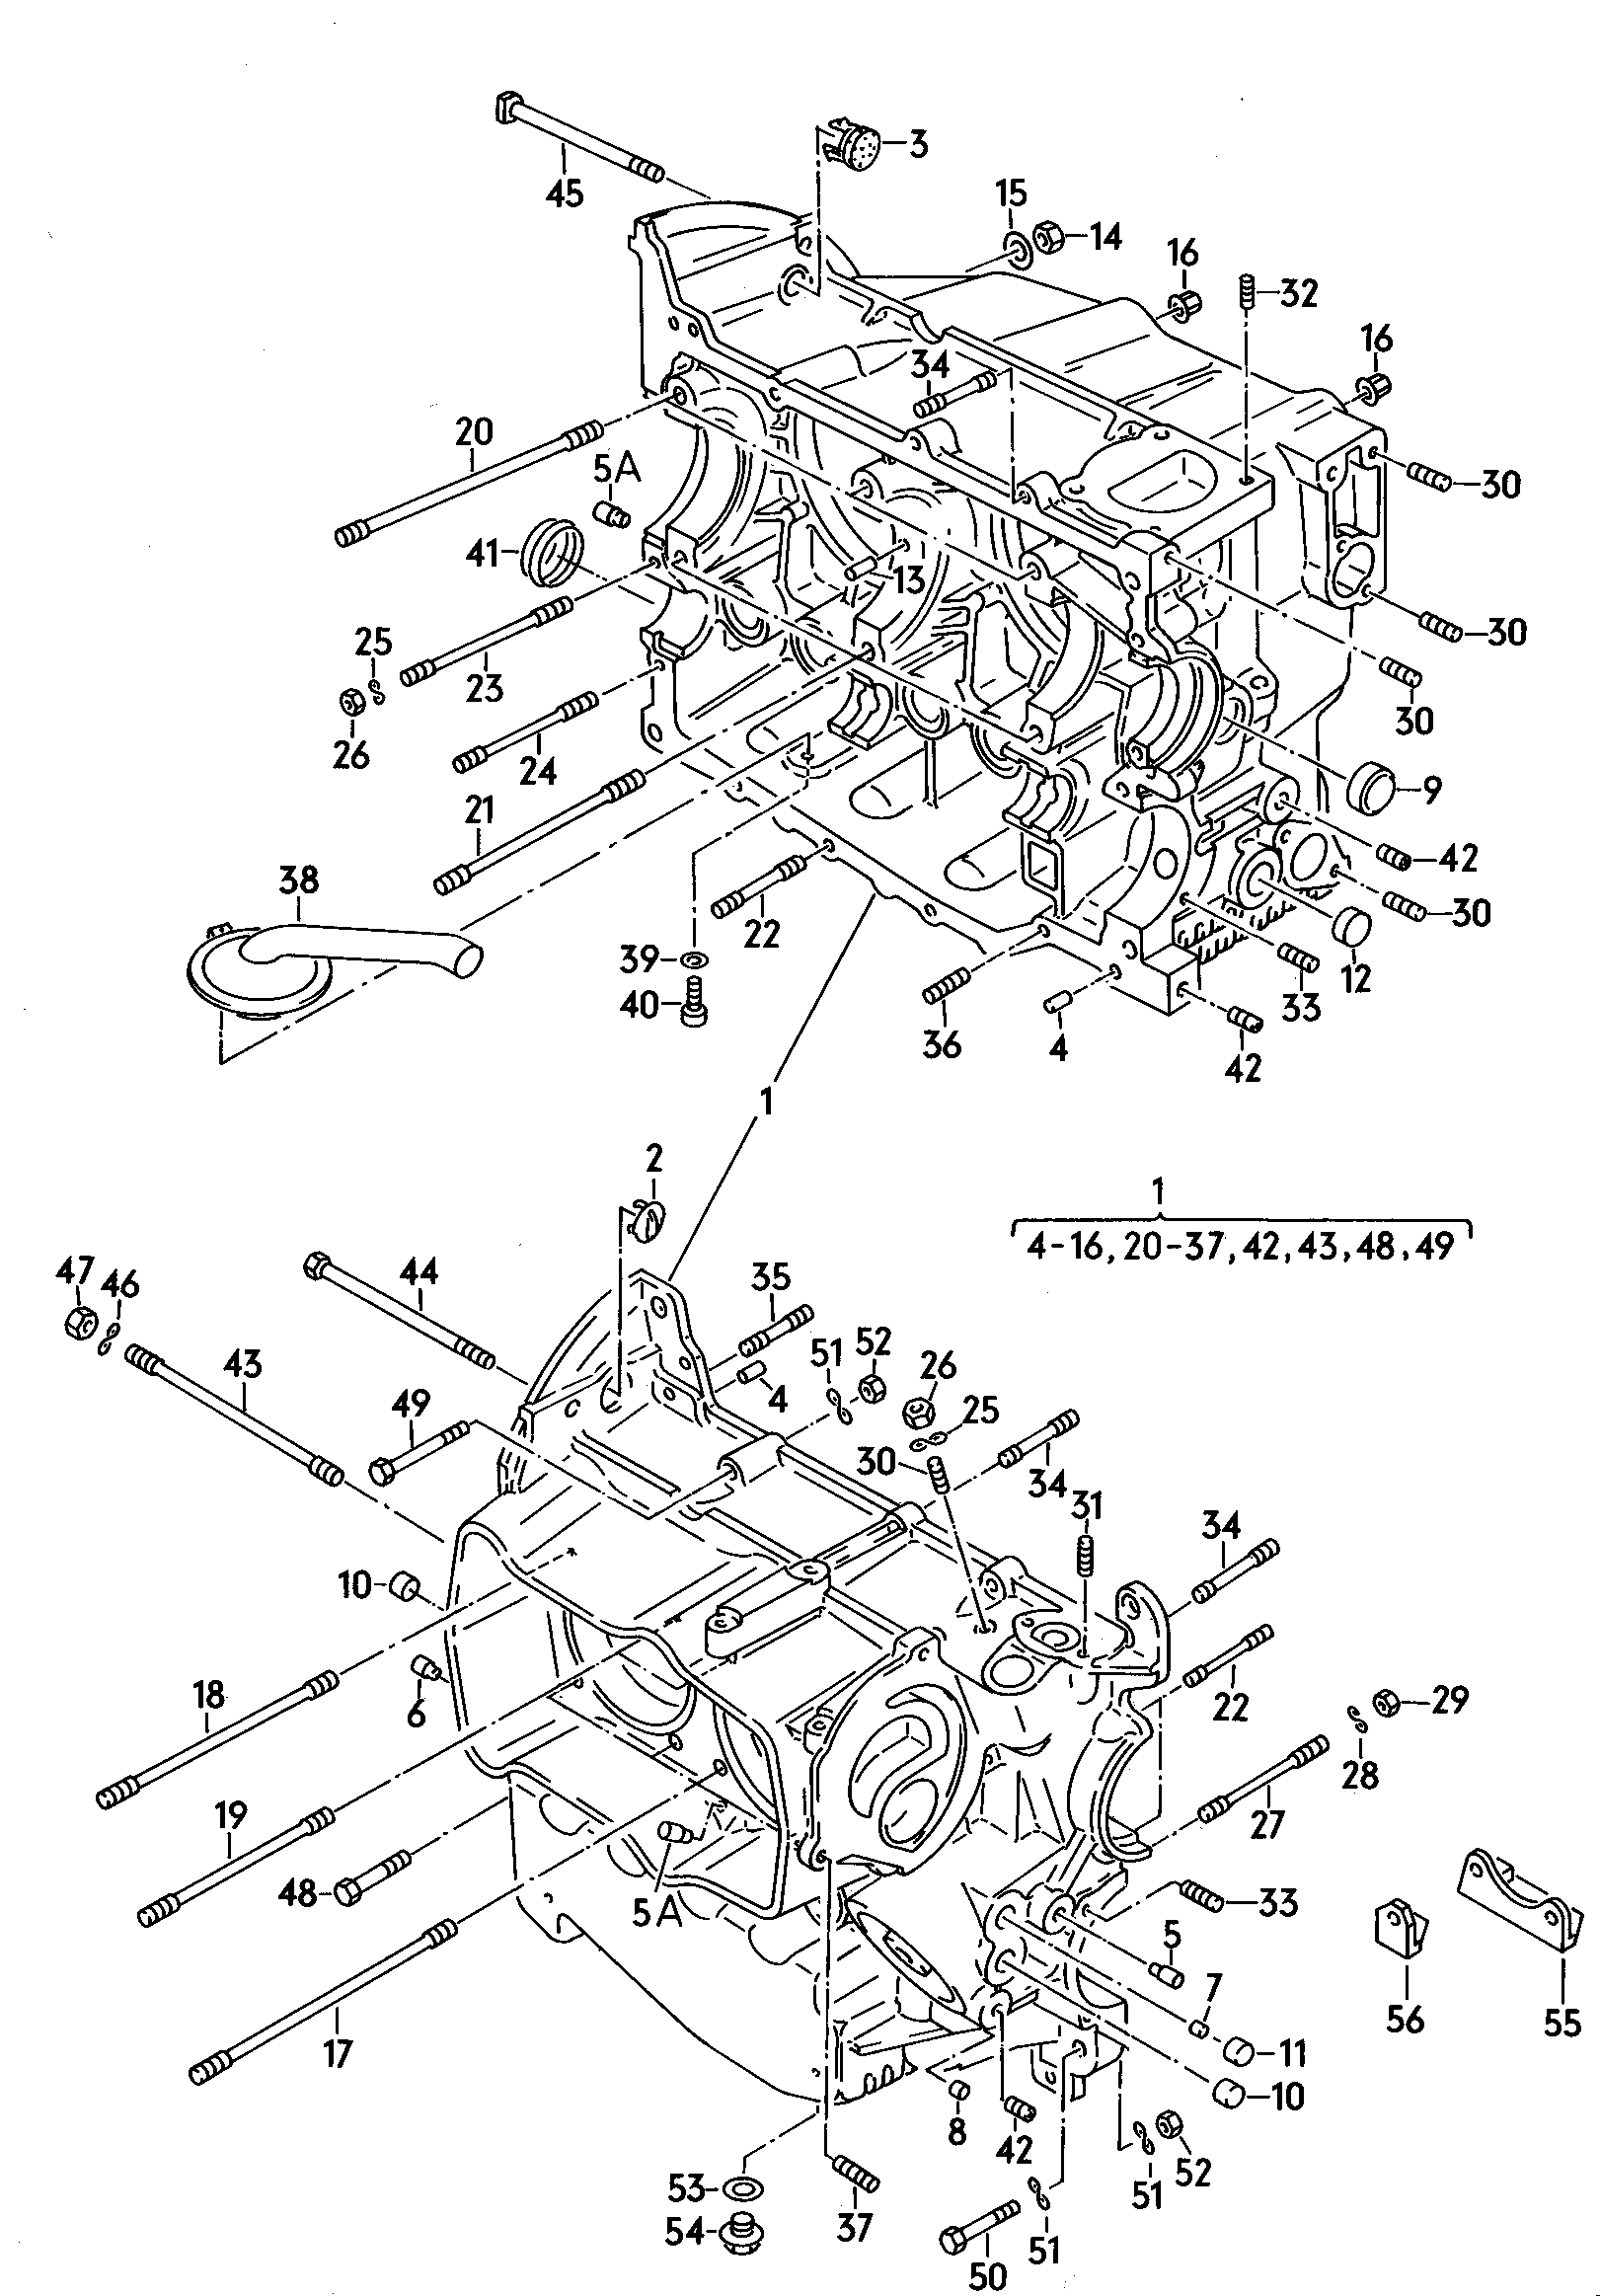 Carter-moteur 1,9-2,1l - Typ 2/syncro - t2